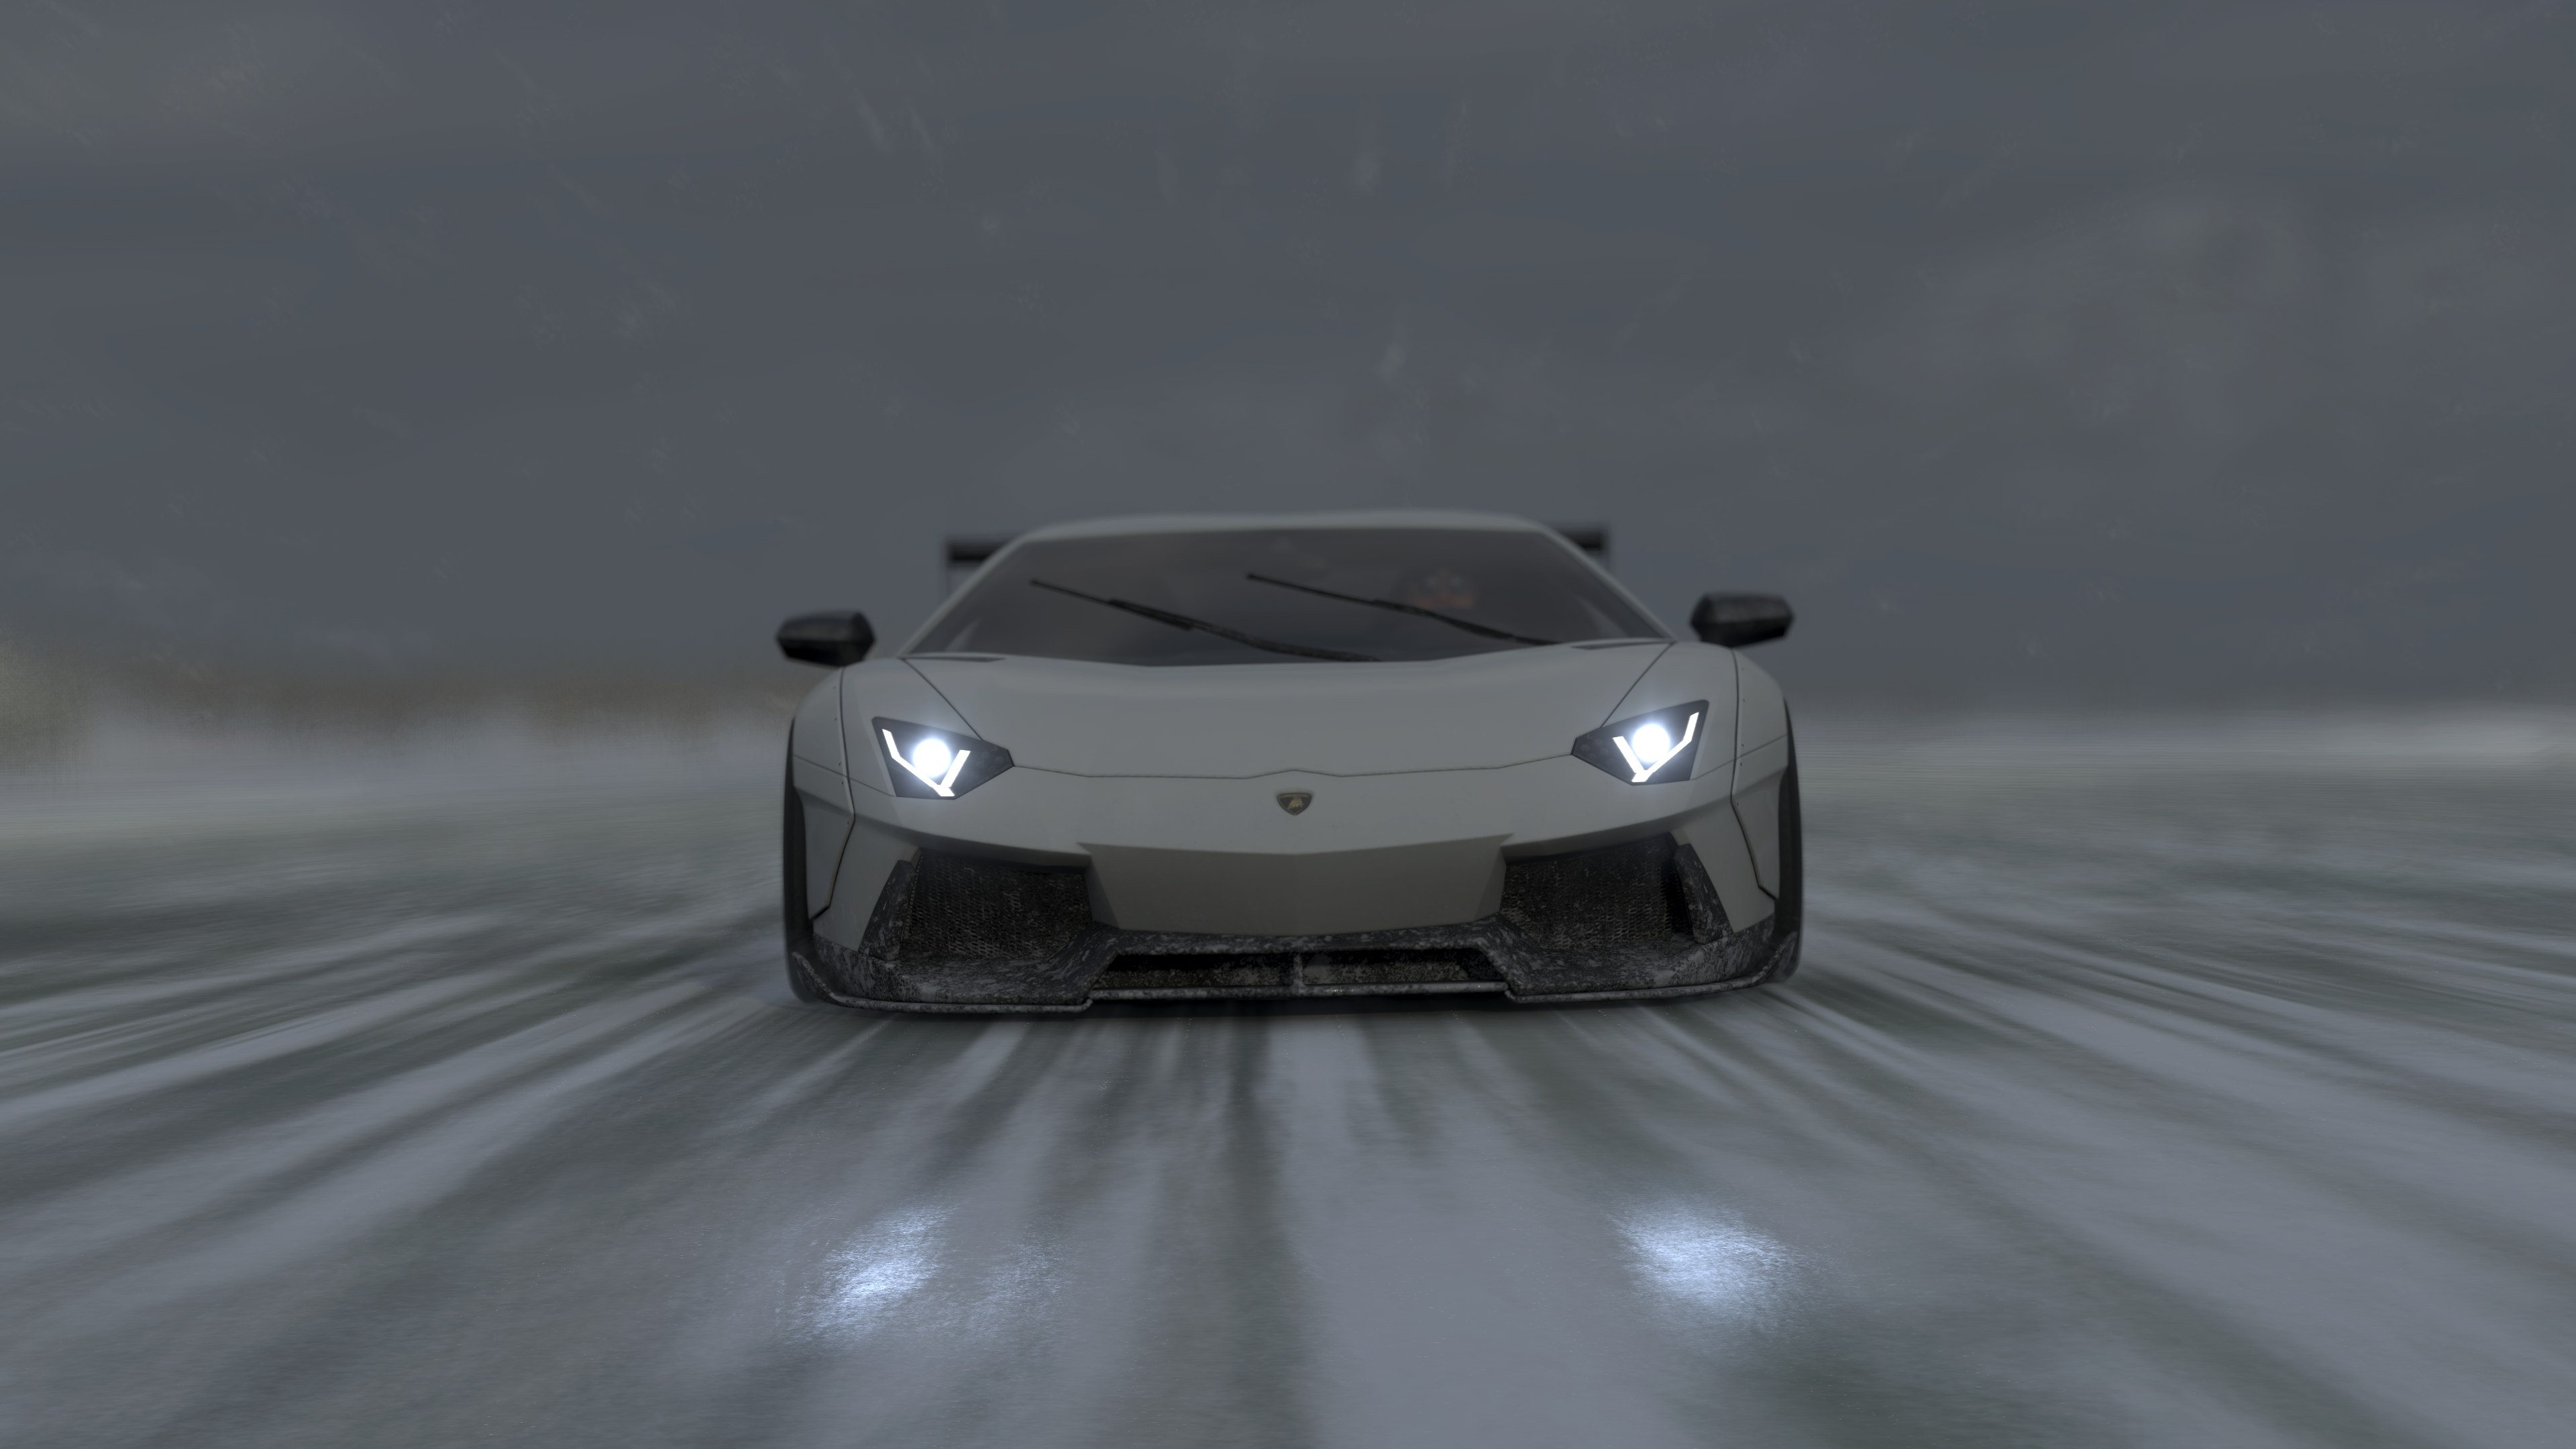 General 3840x2160 Forza Forza Horizon 4 video games road snow vehicle Lamborghini Lamborghini Aventador supercars ice screen shot italian cars Volkswagen Group PlaygroundGames